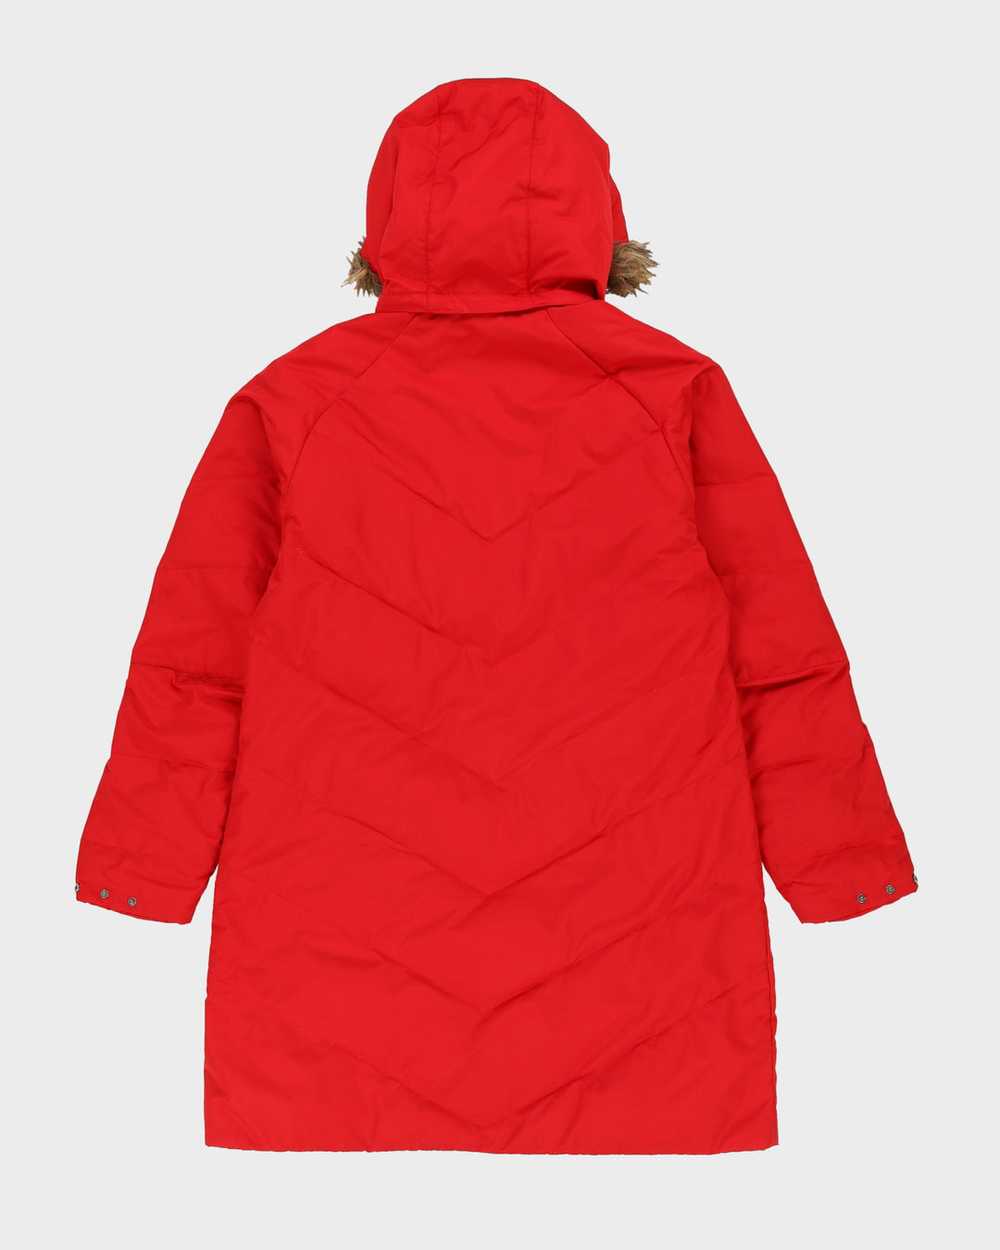 Helly Hansen Red Parka Puffer Jacket - XL - image 2